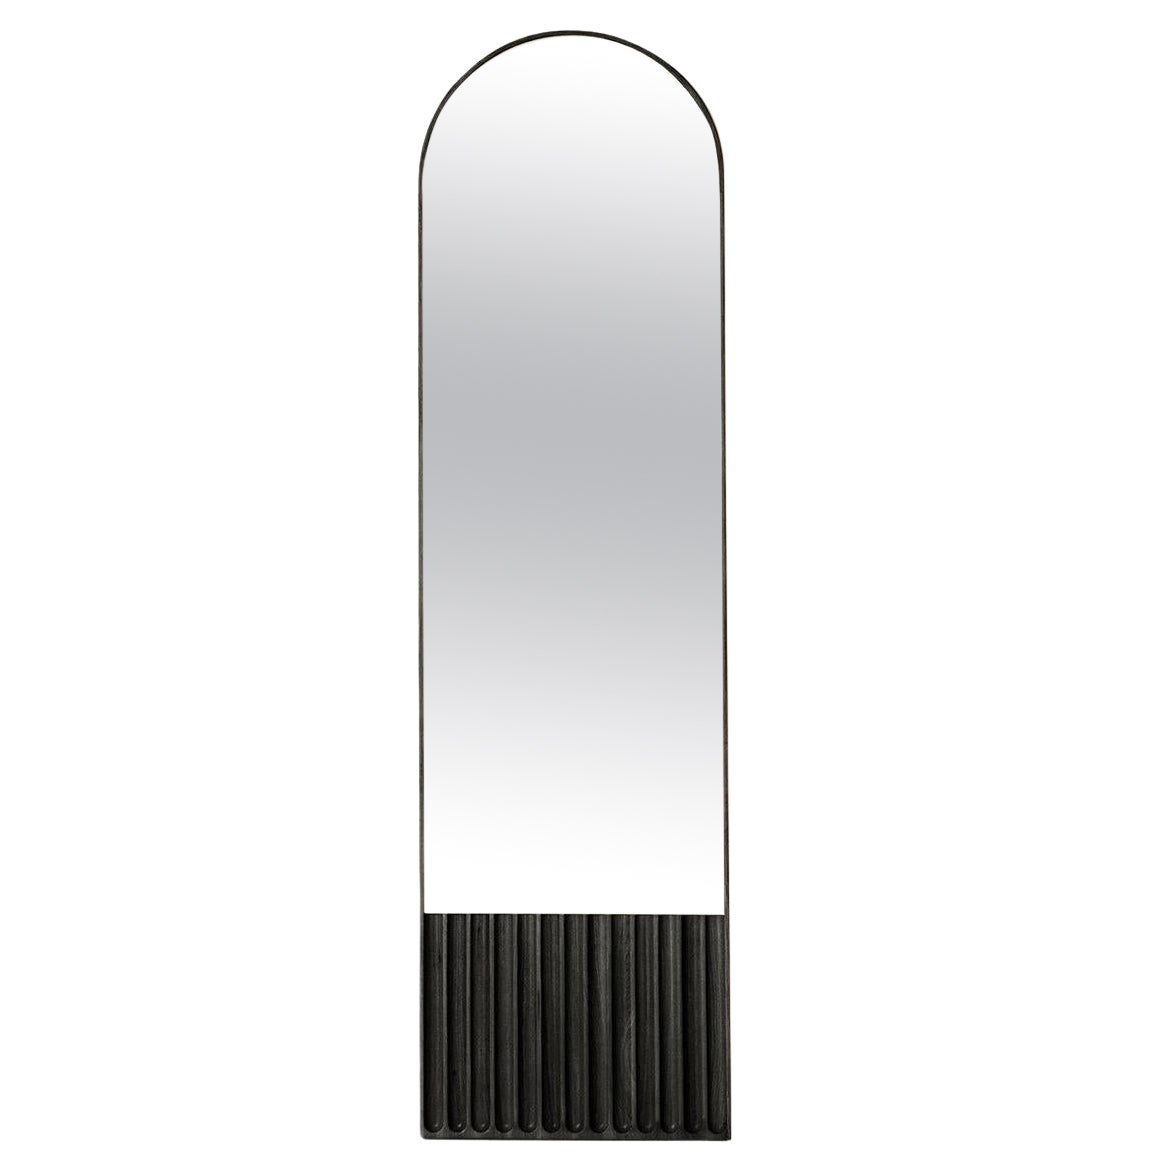 Tutto Sesto Solid Wood Oval Mirror, Ash in Black Finish, Contemporary For Sale